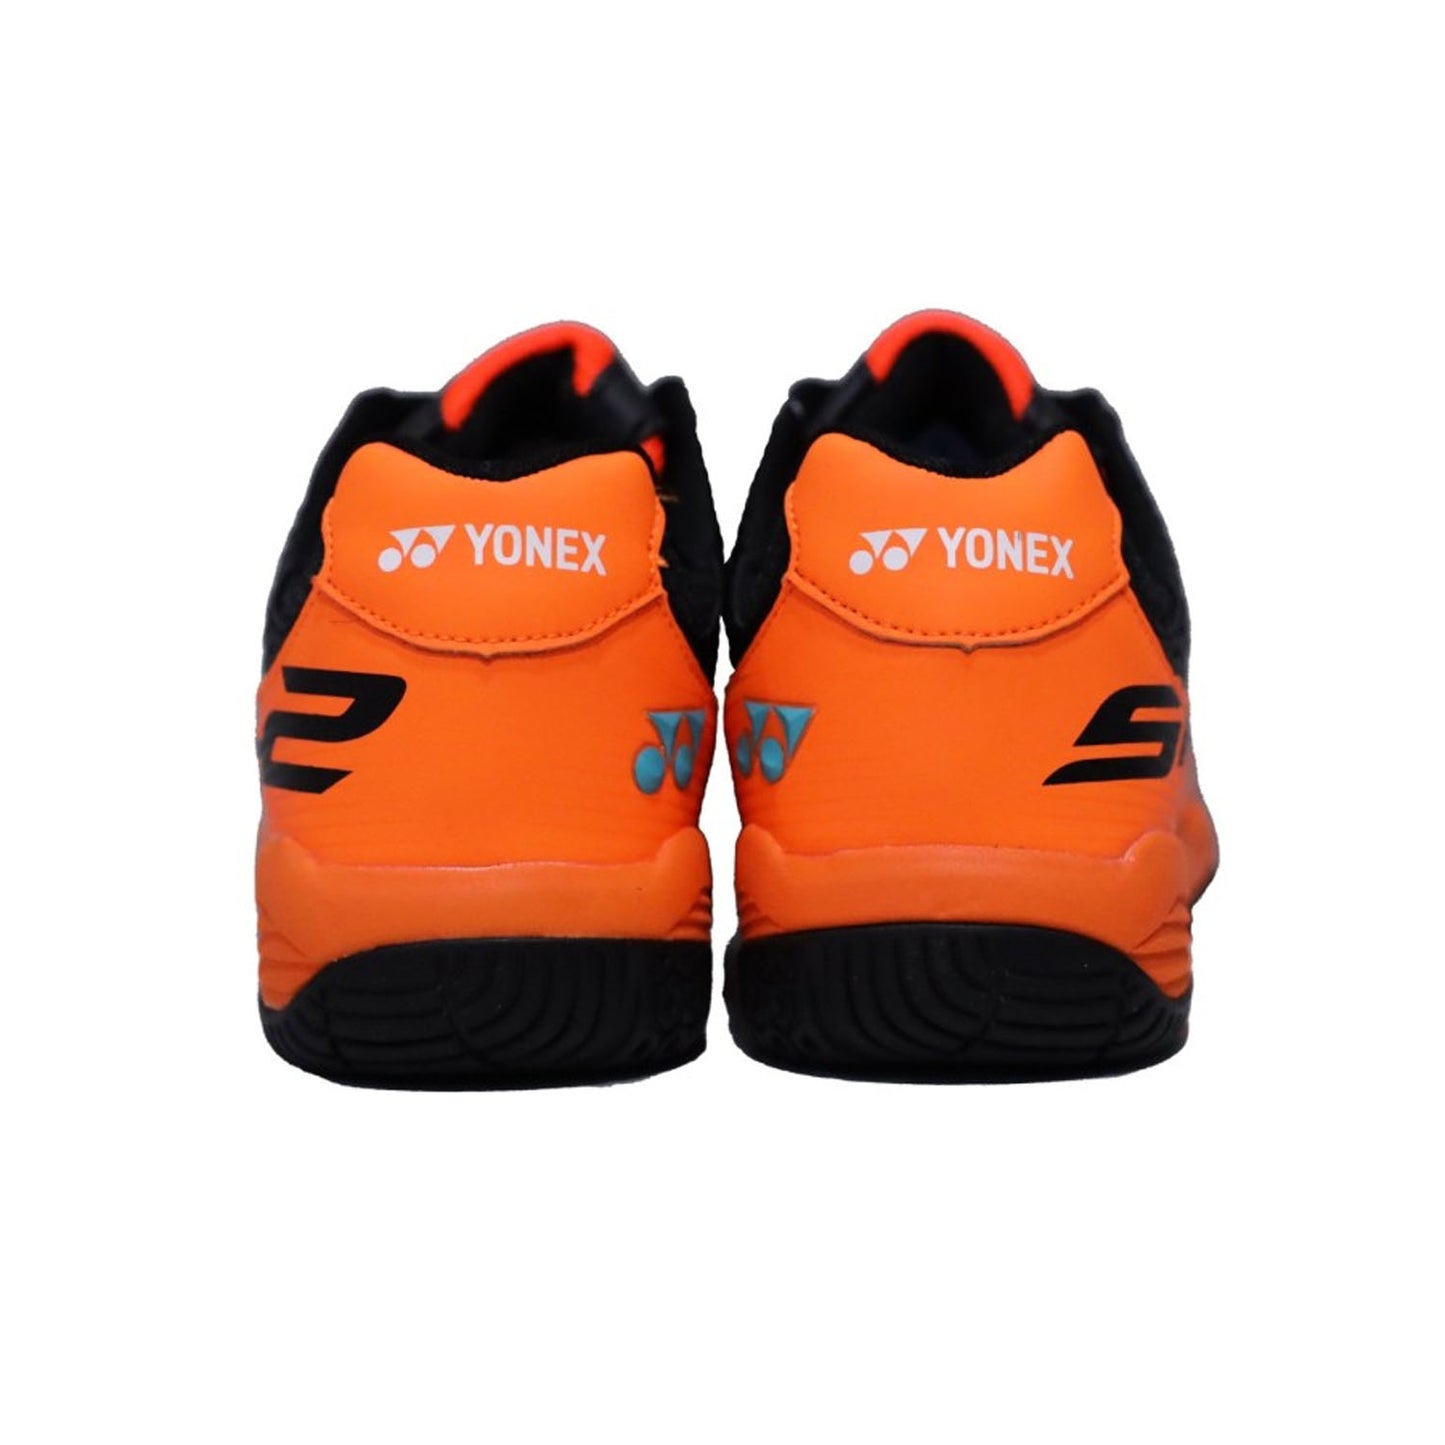 Yonex Tour Skill 2 Junior Badminton Shoes - Best Price online Prokicksports.com